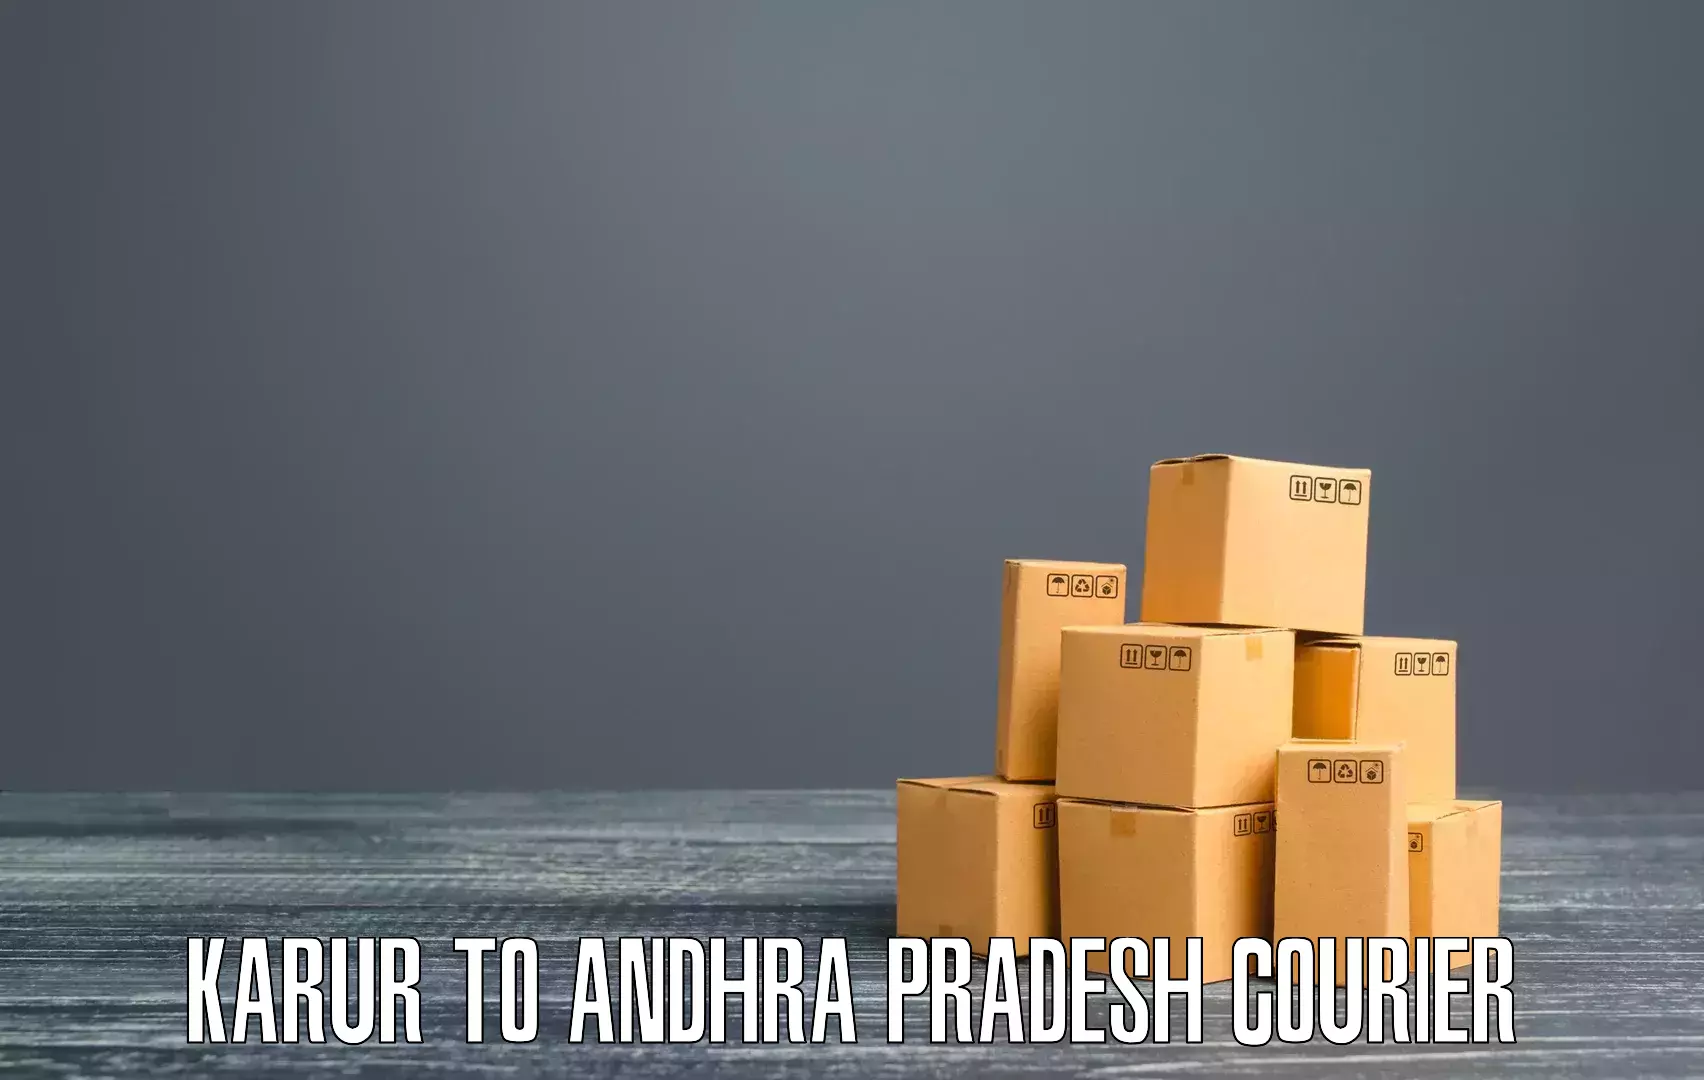 Delivery service partnership Karur to Andhra Pradesh